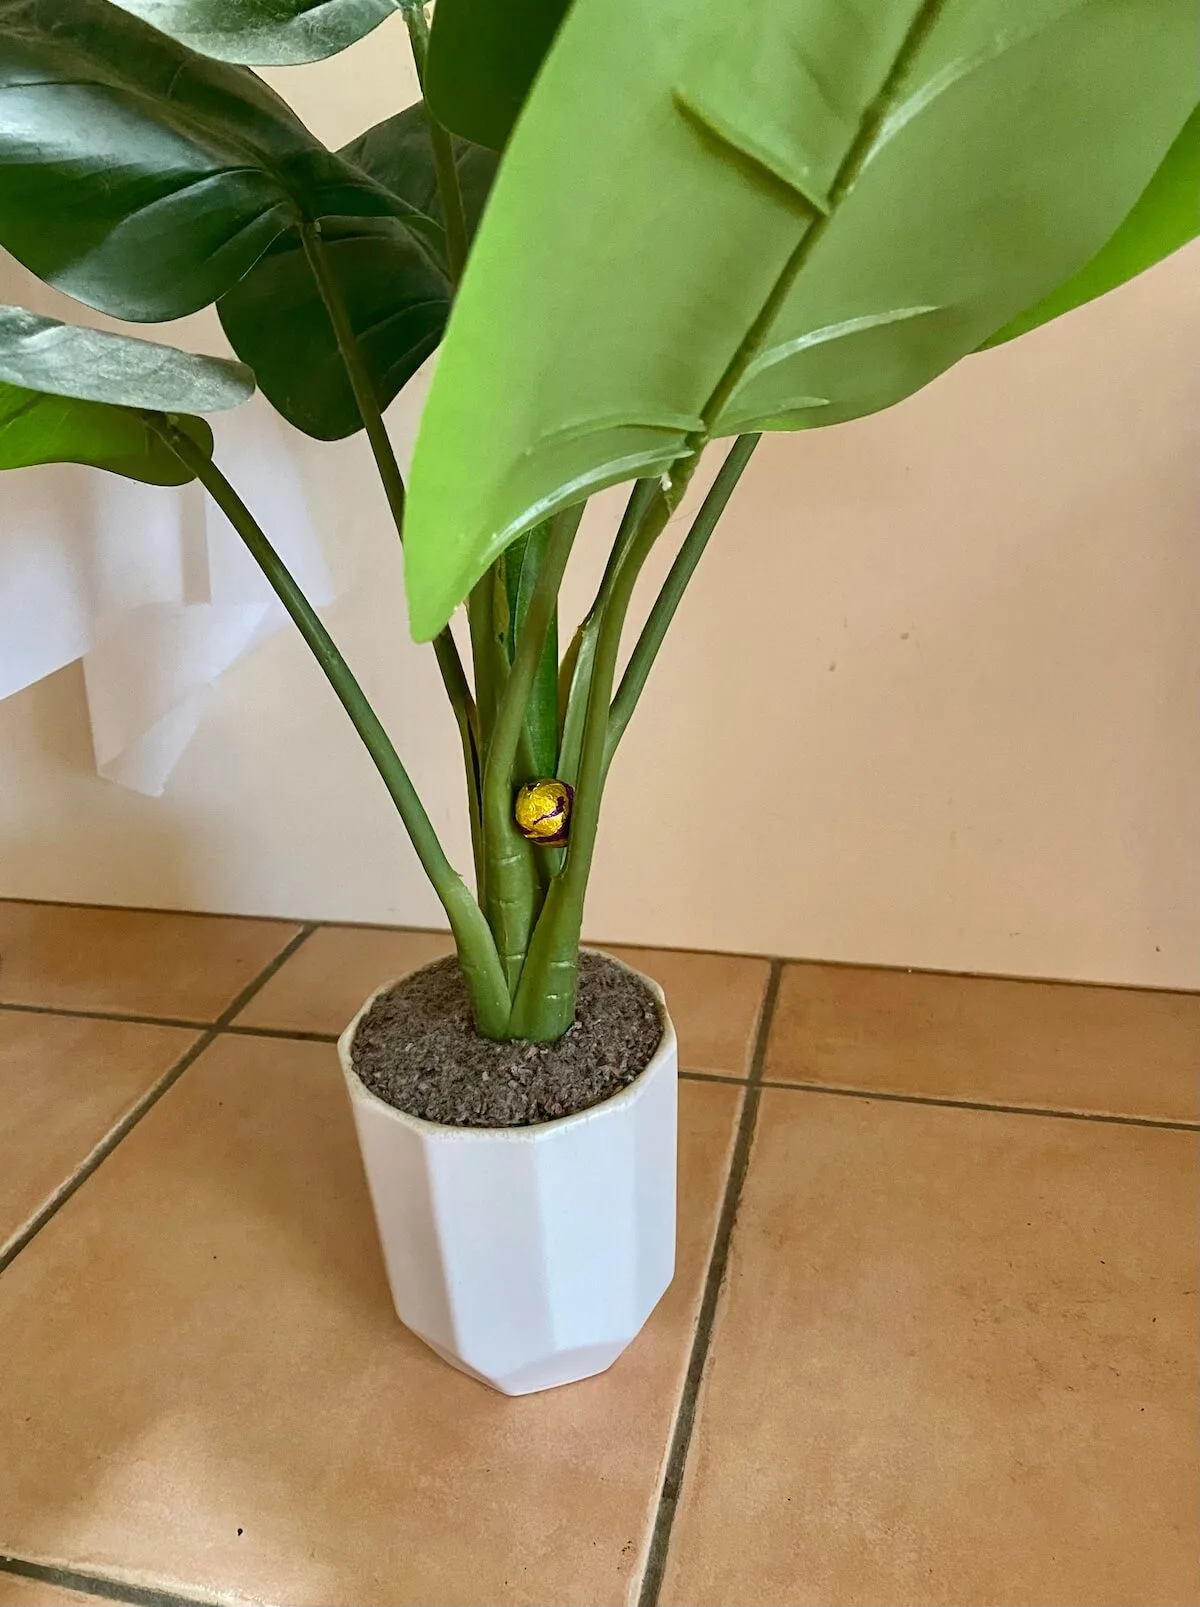 Easter egg hidden in stem of a fake plant